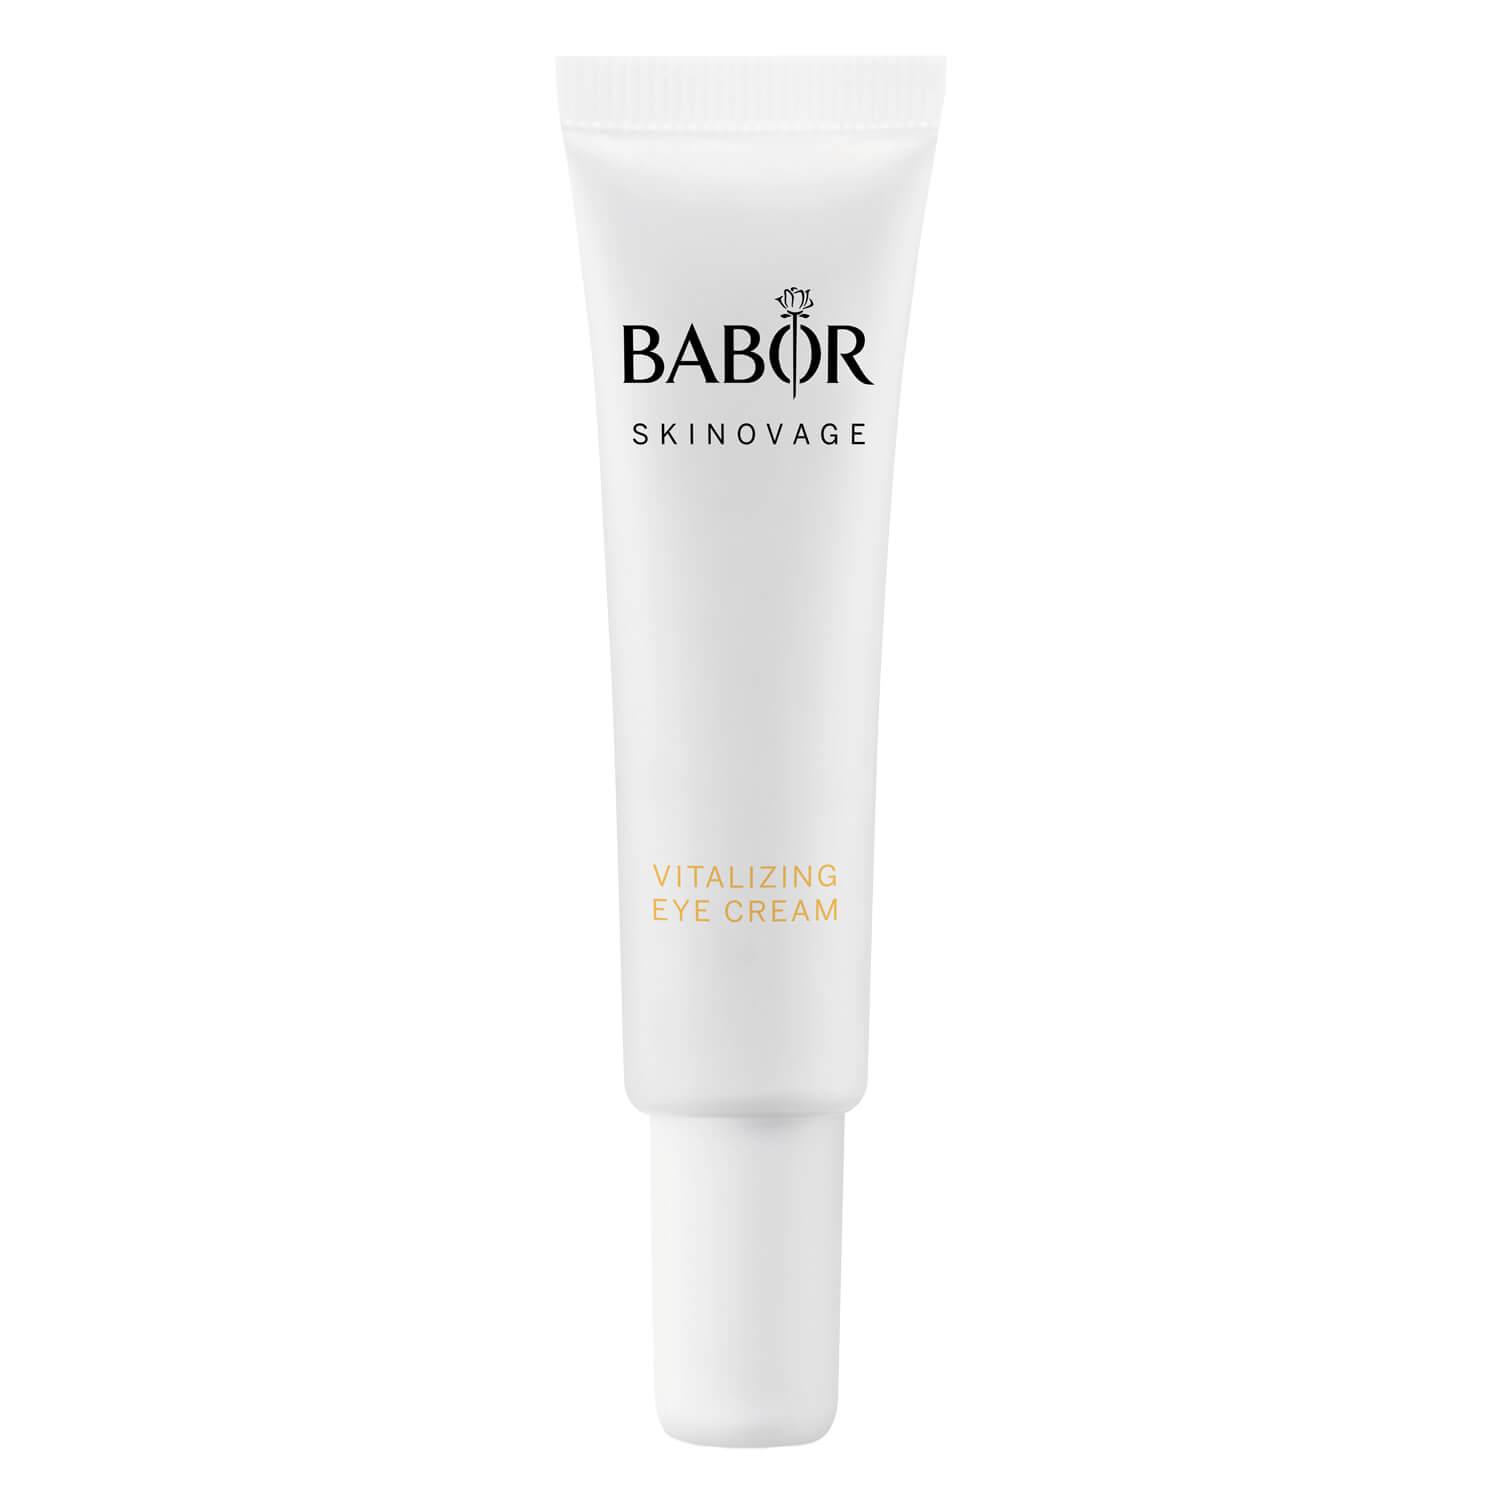 BABOR SKINOVAGE - Vitalizing Eye Cream